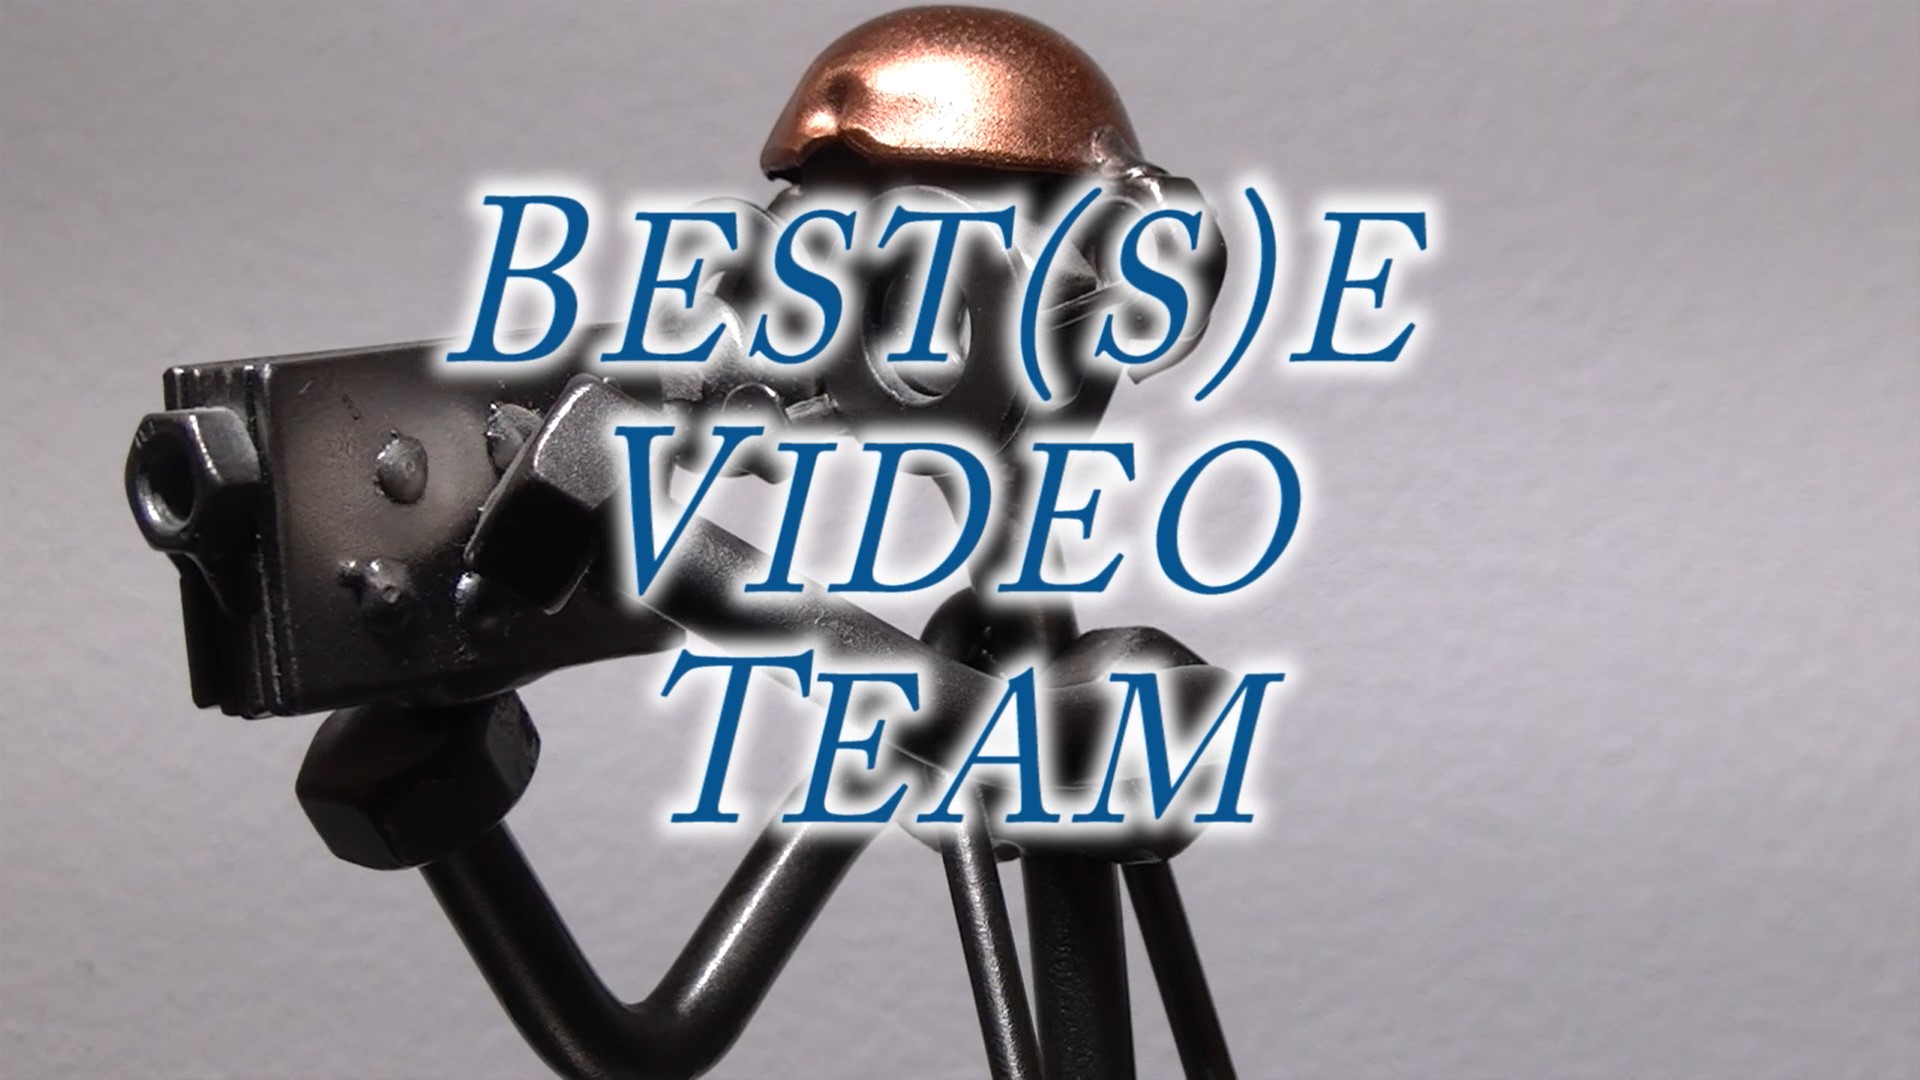 BVT Best(s)e Video Team promo